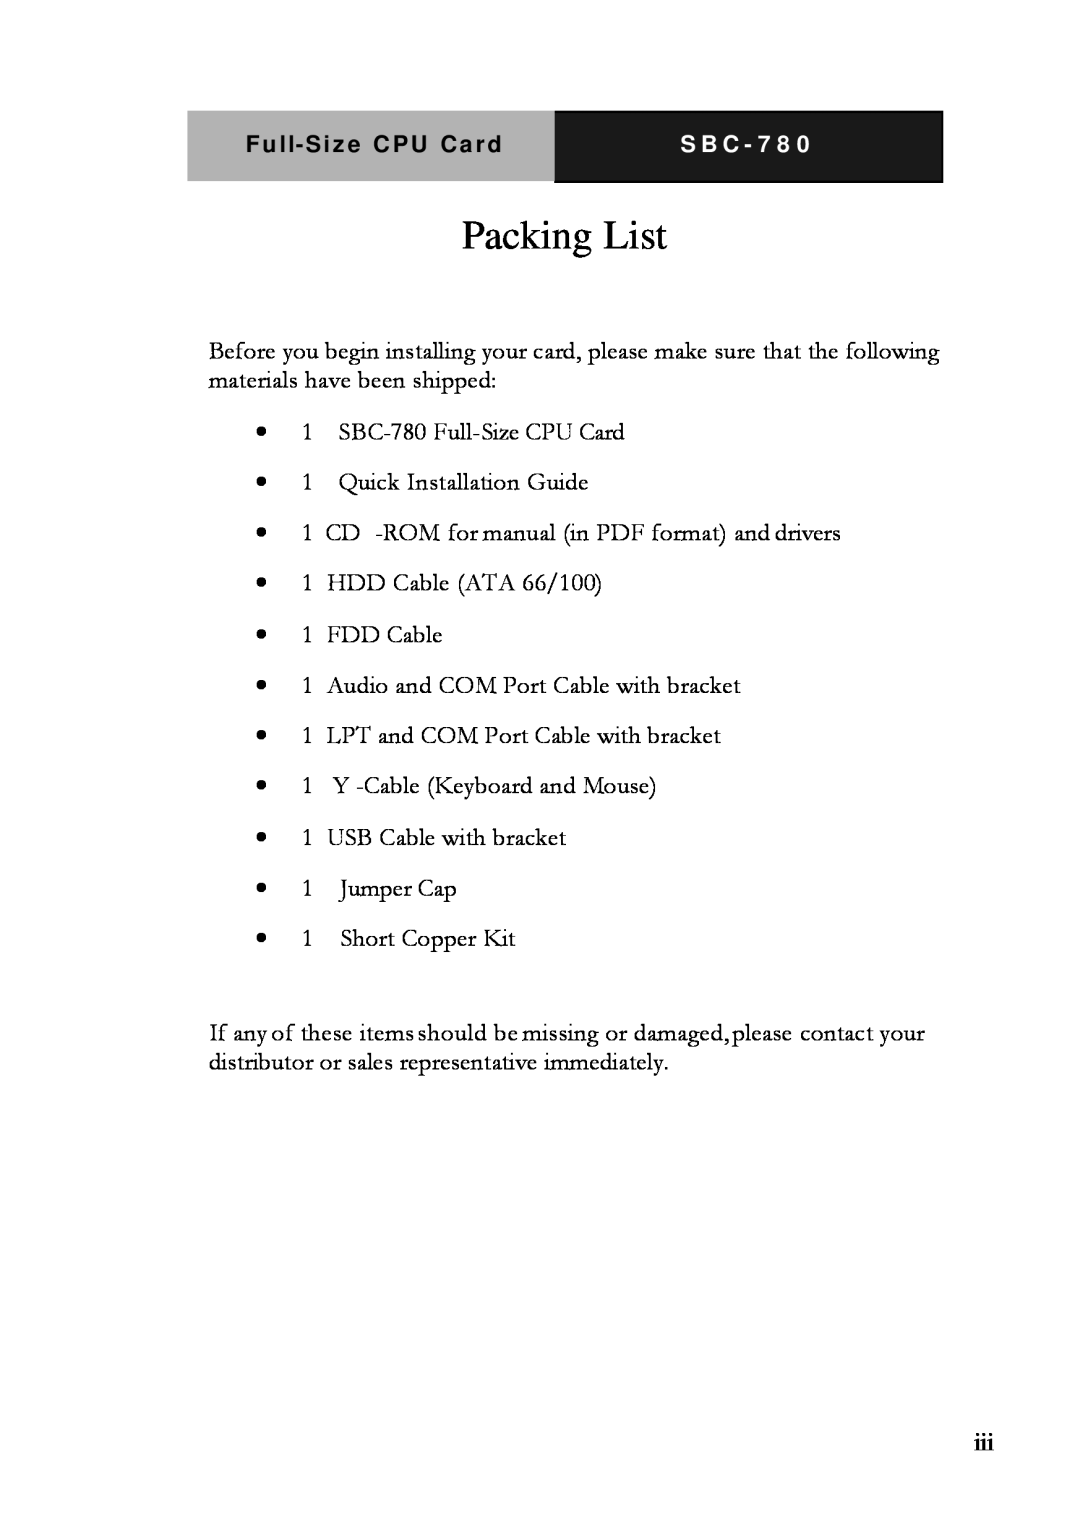 Intel SBC-780 manual Packing List 